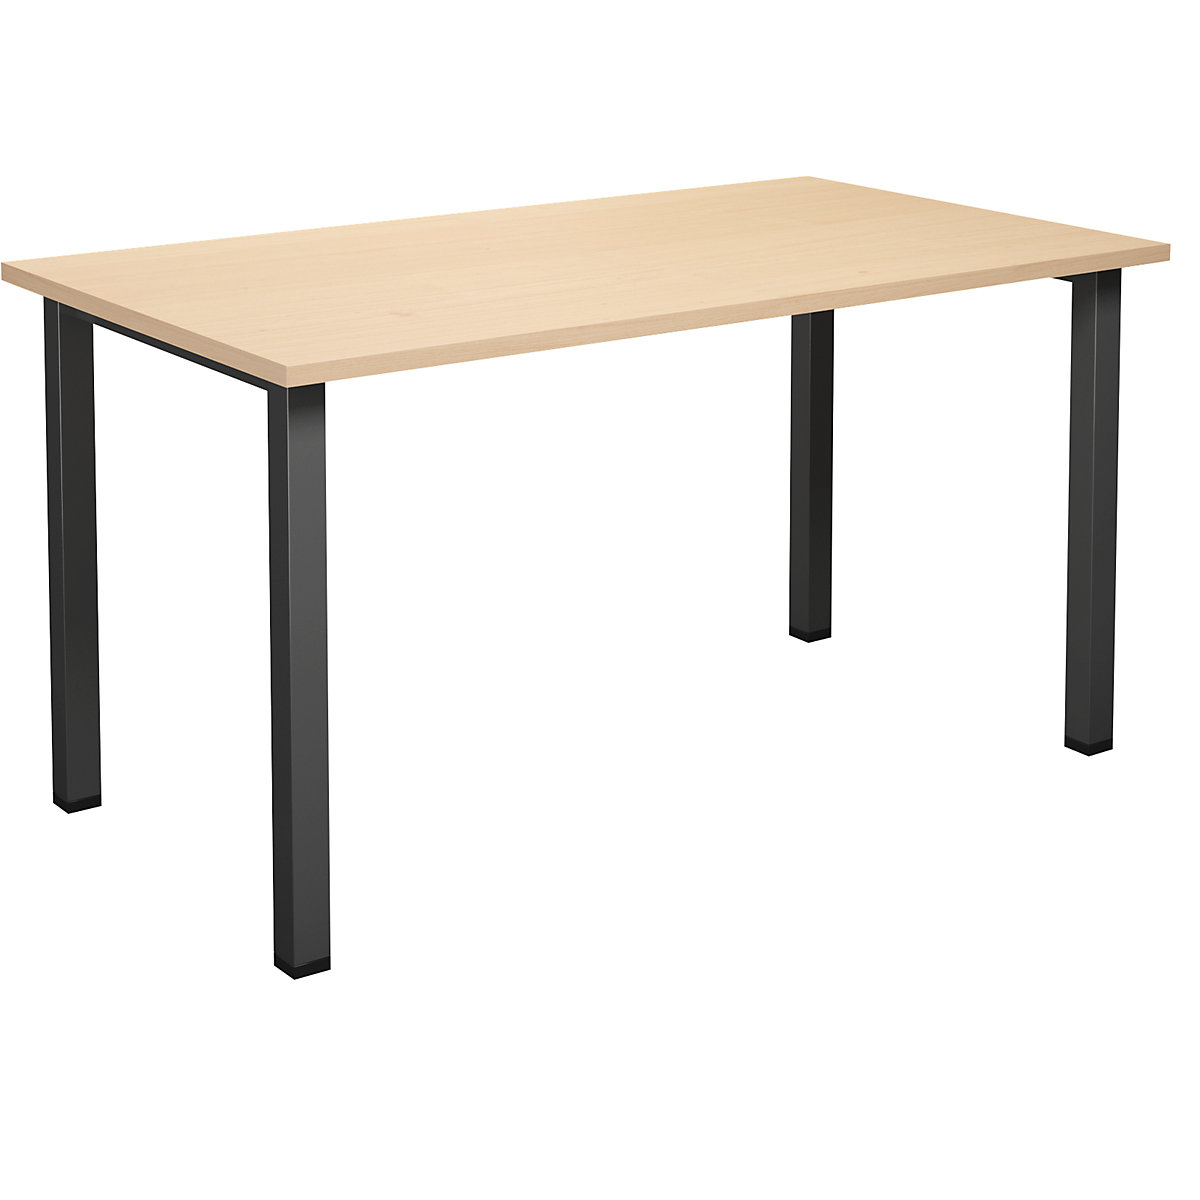 DUO-U multi-purpose desk, straight tabletop, WxD 1400 x 800 mm, birch, black-3